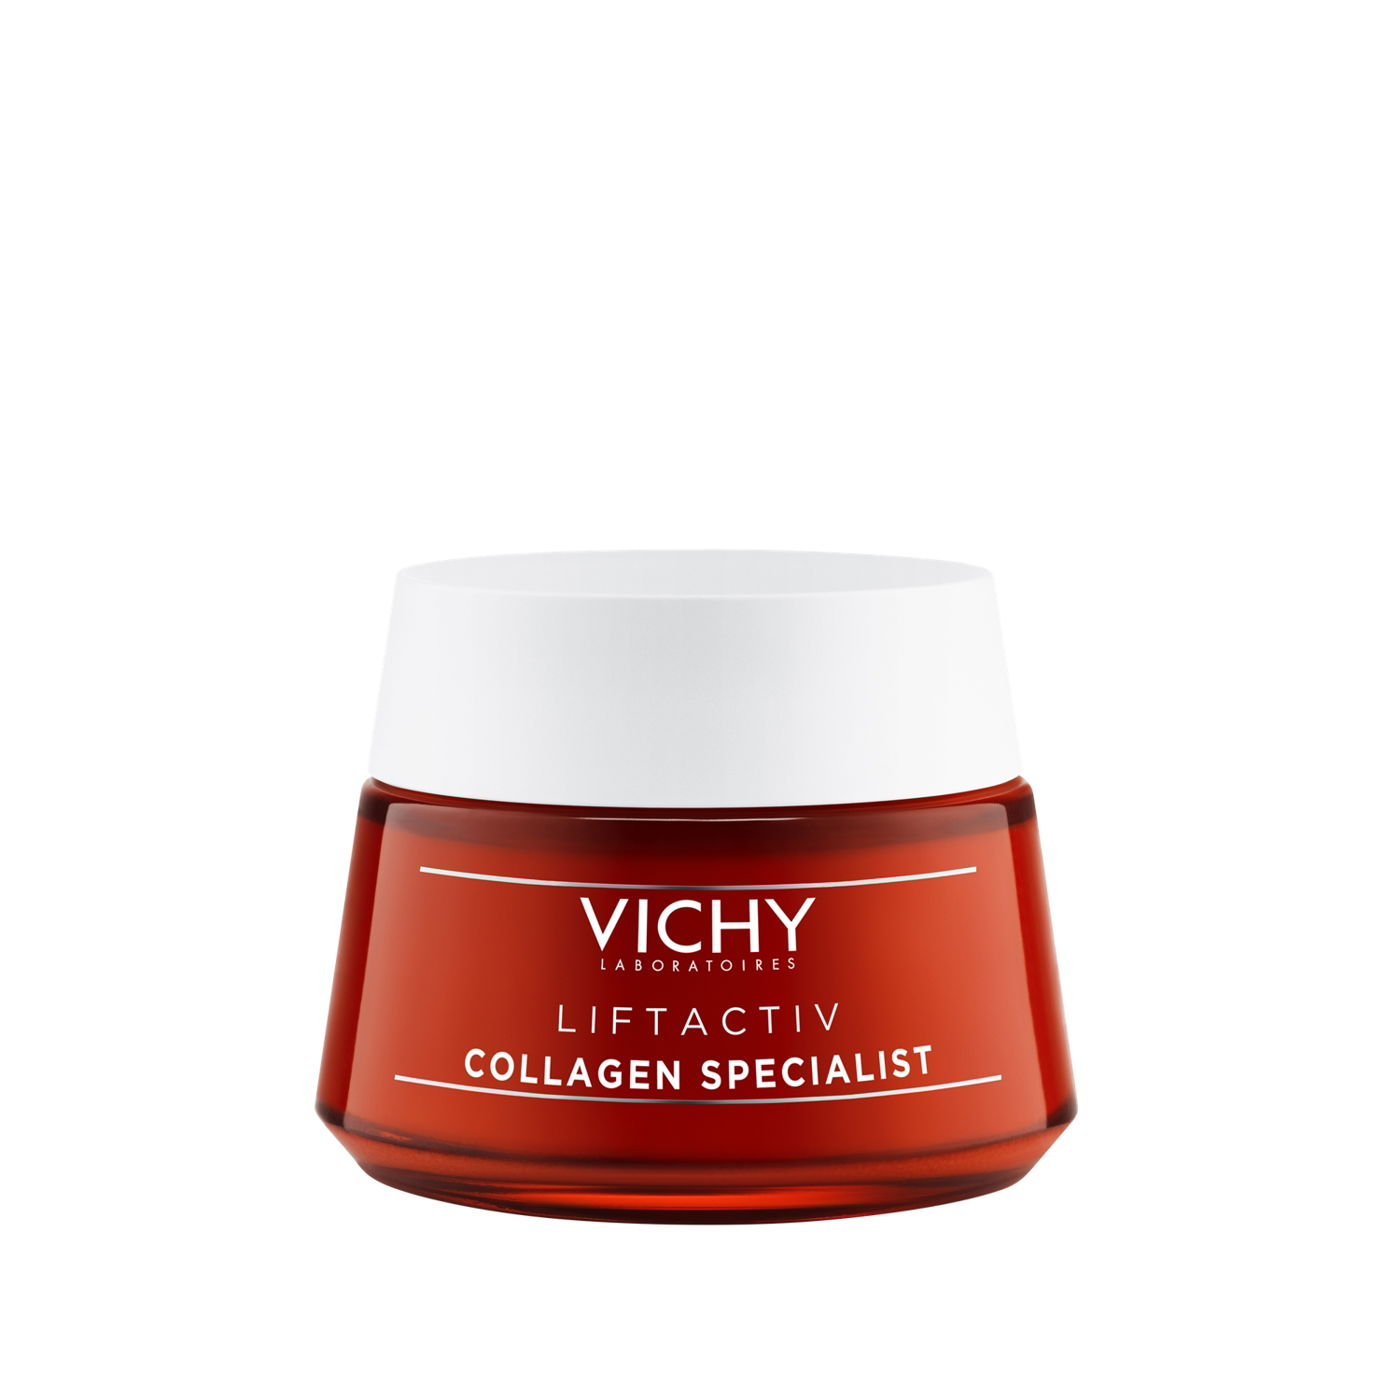 Vichy Liftactiv Collagen Specialist Yaşlanma Karşıtı Krem kapak resmi